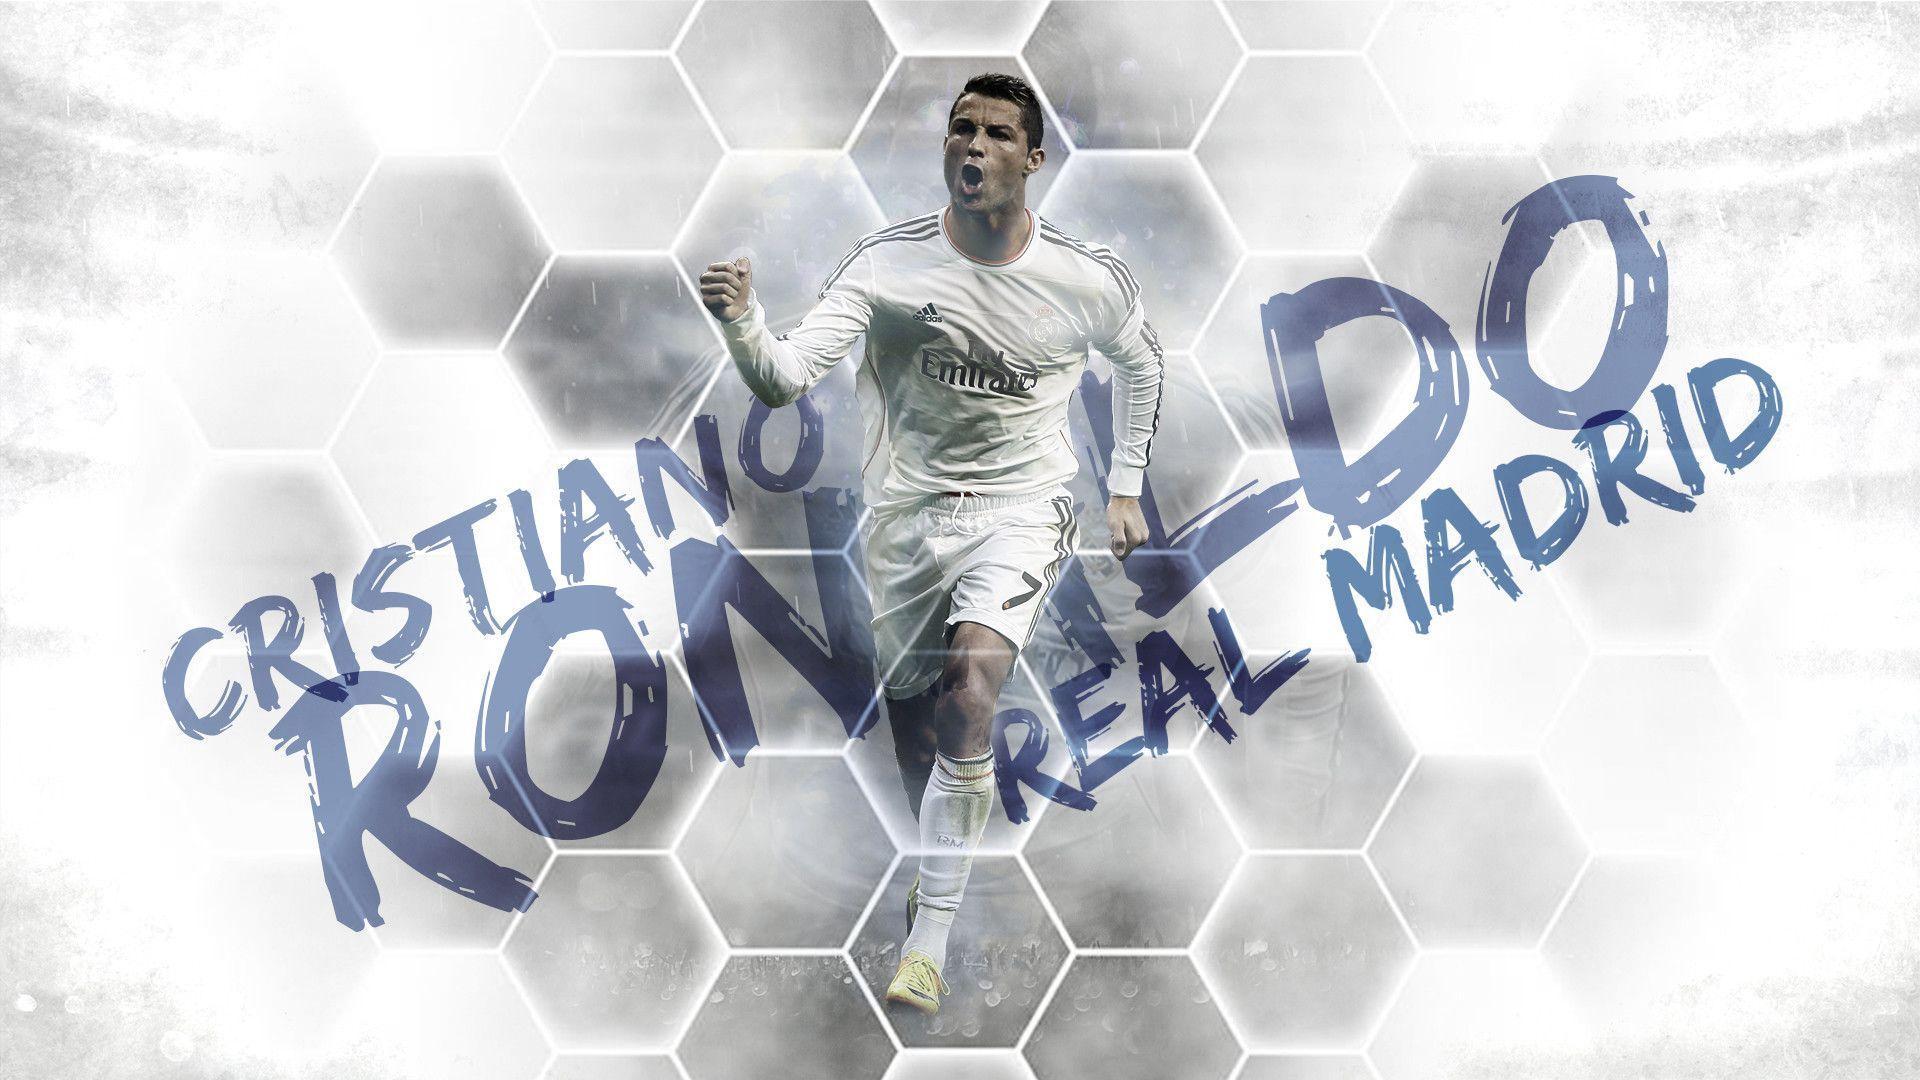 Cristiano Ronaldo 2014 Real Madrid Desktop Background Wide or HD